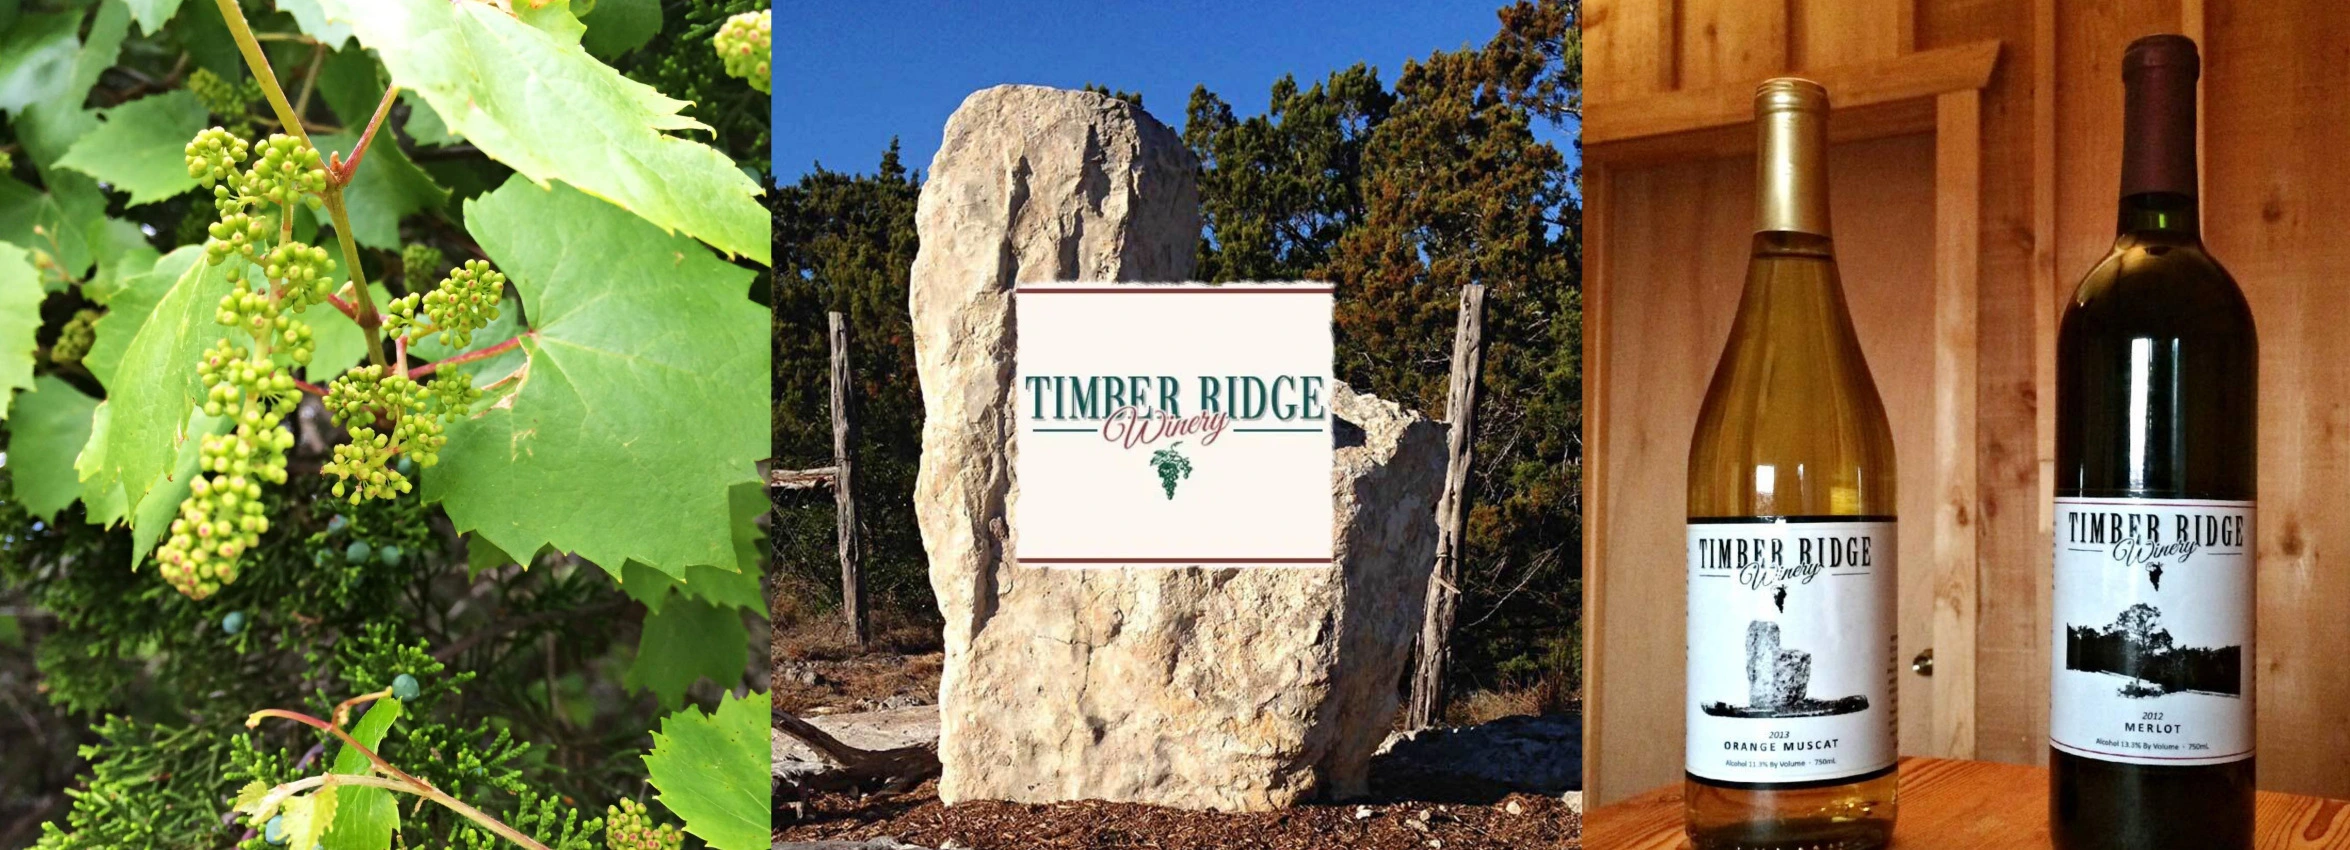 Timber-Ridge-Winery_desktop_ET